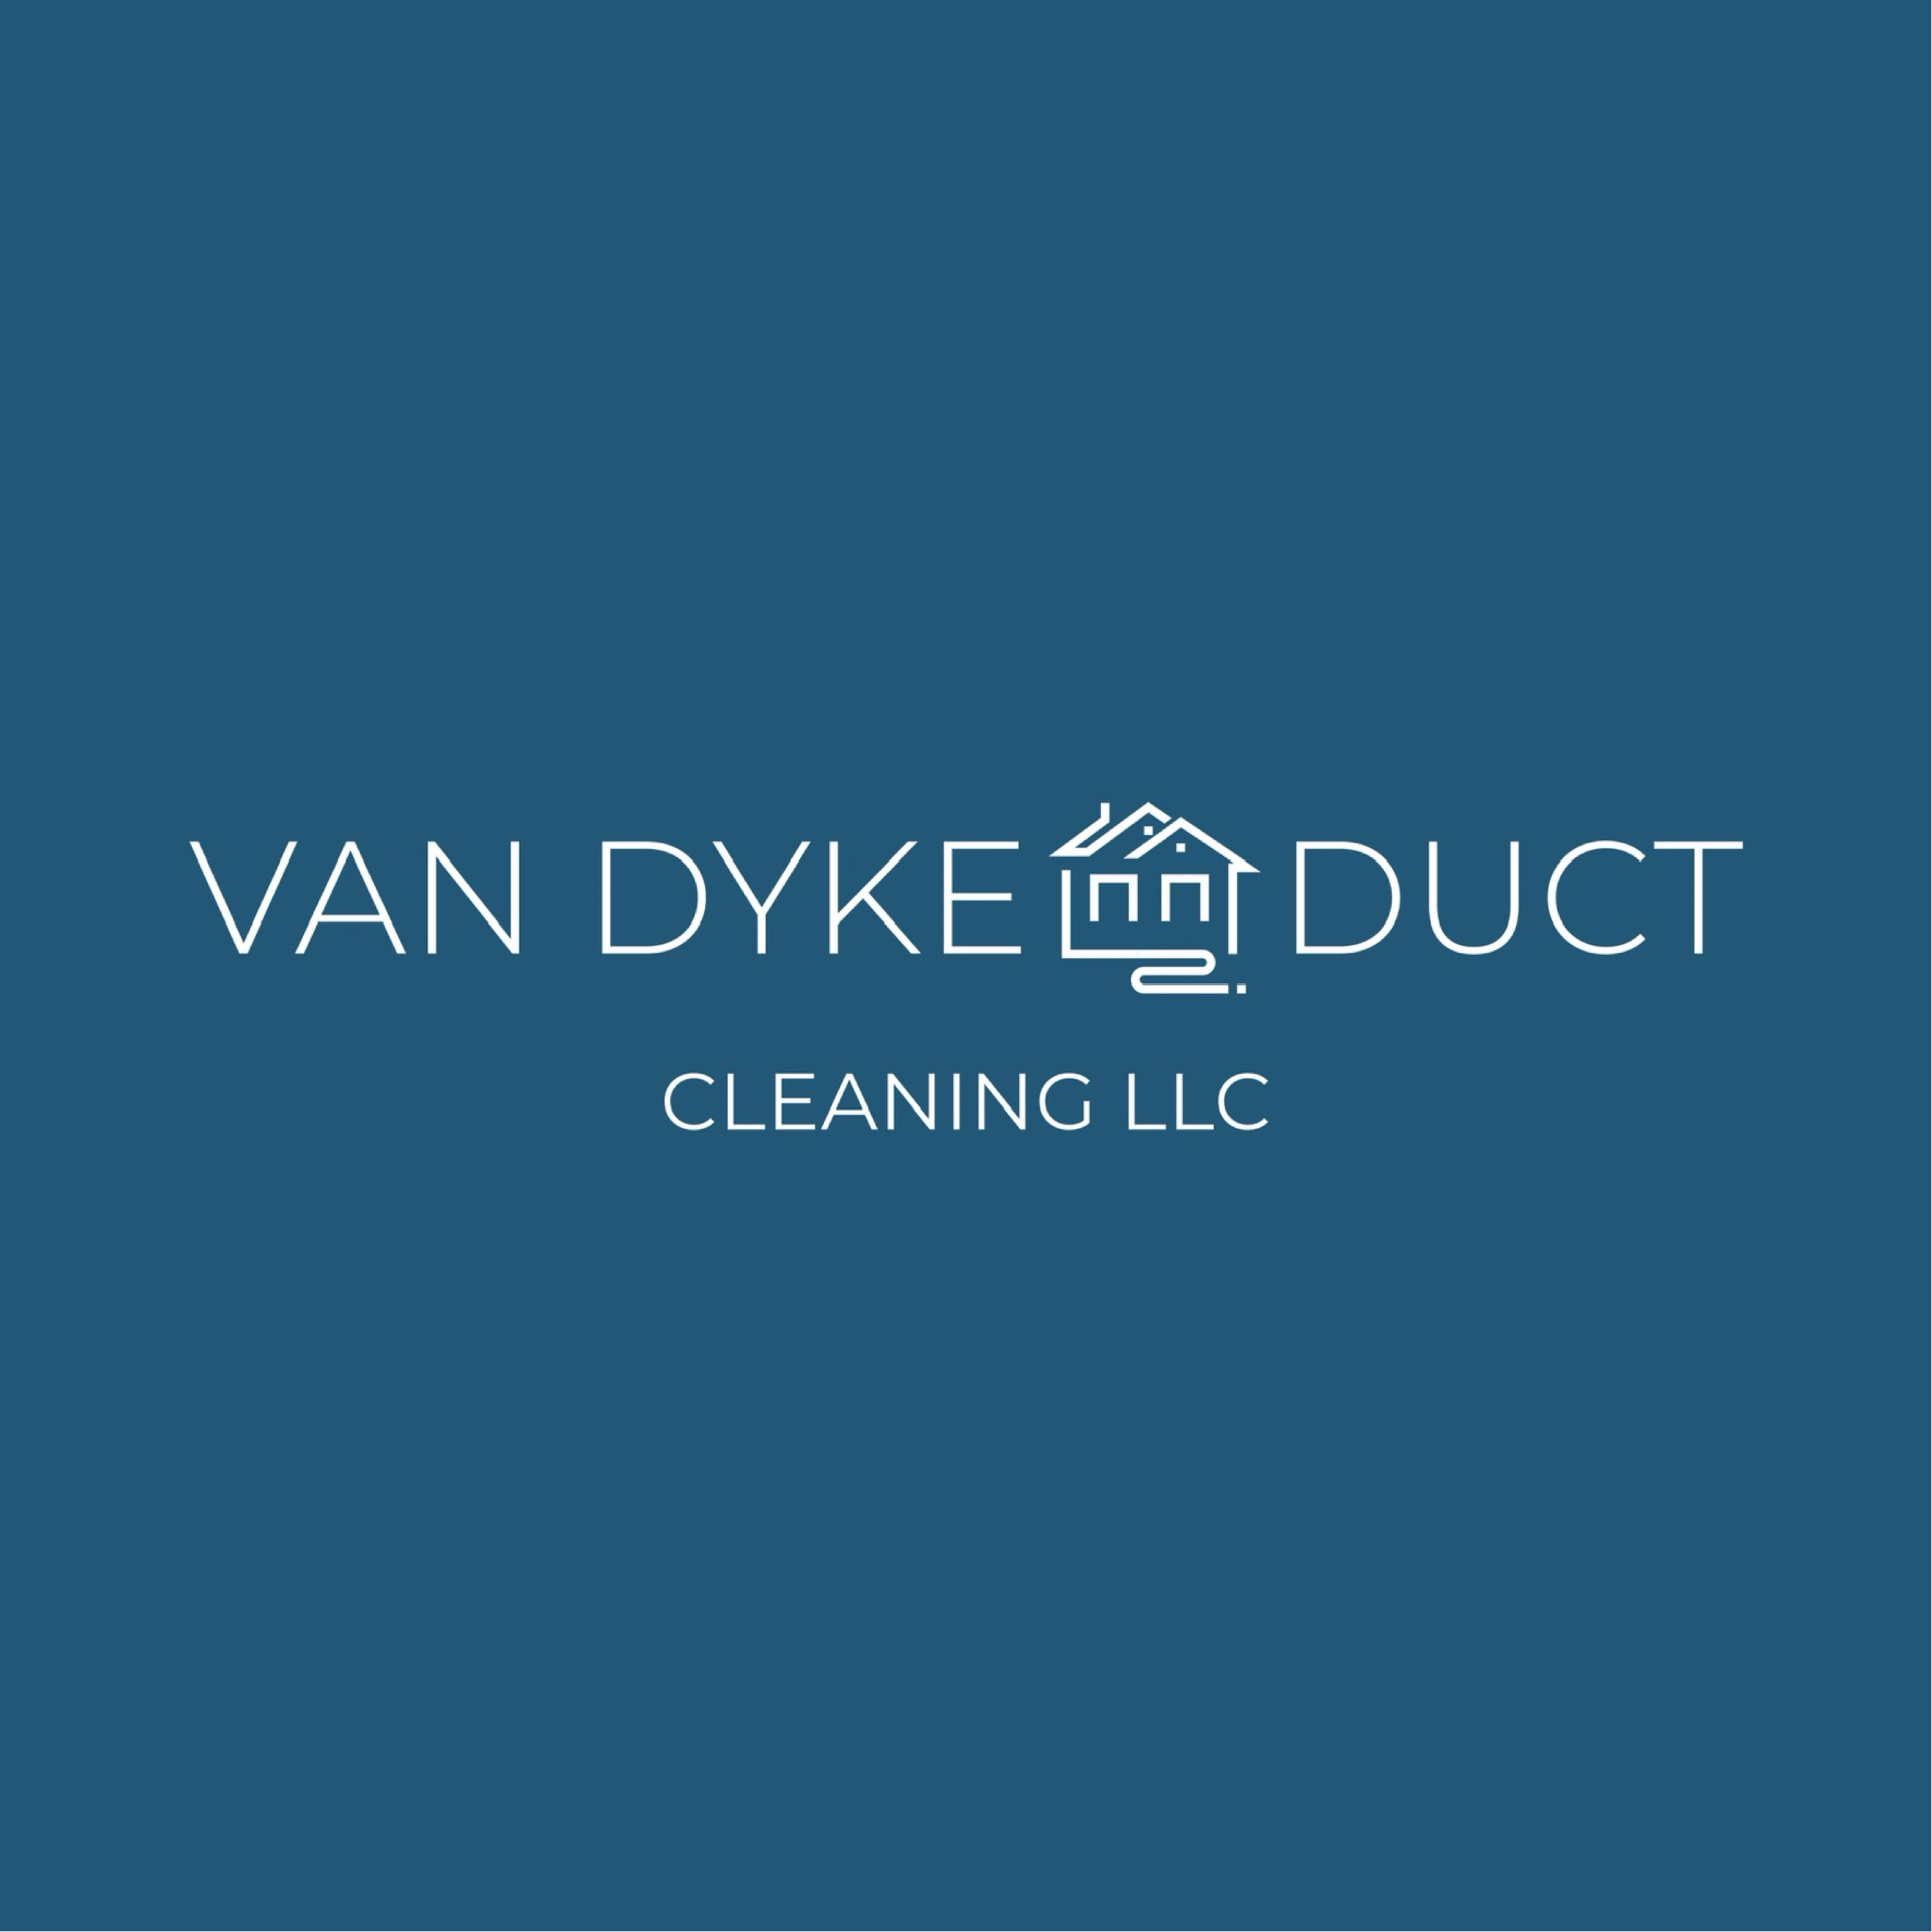 Van Dyke Duct Cleaning LLC Logo